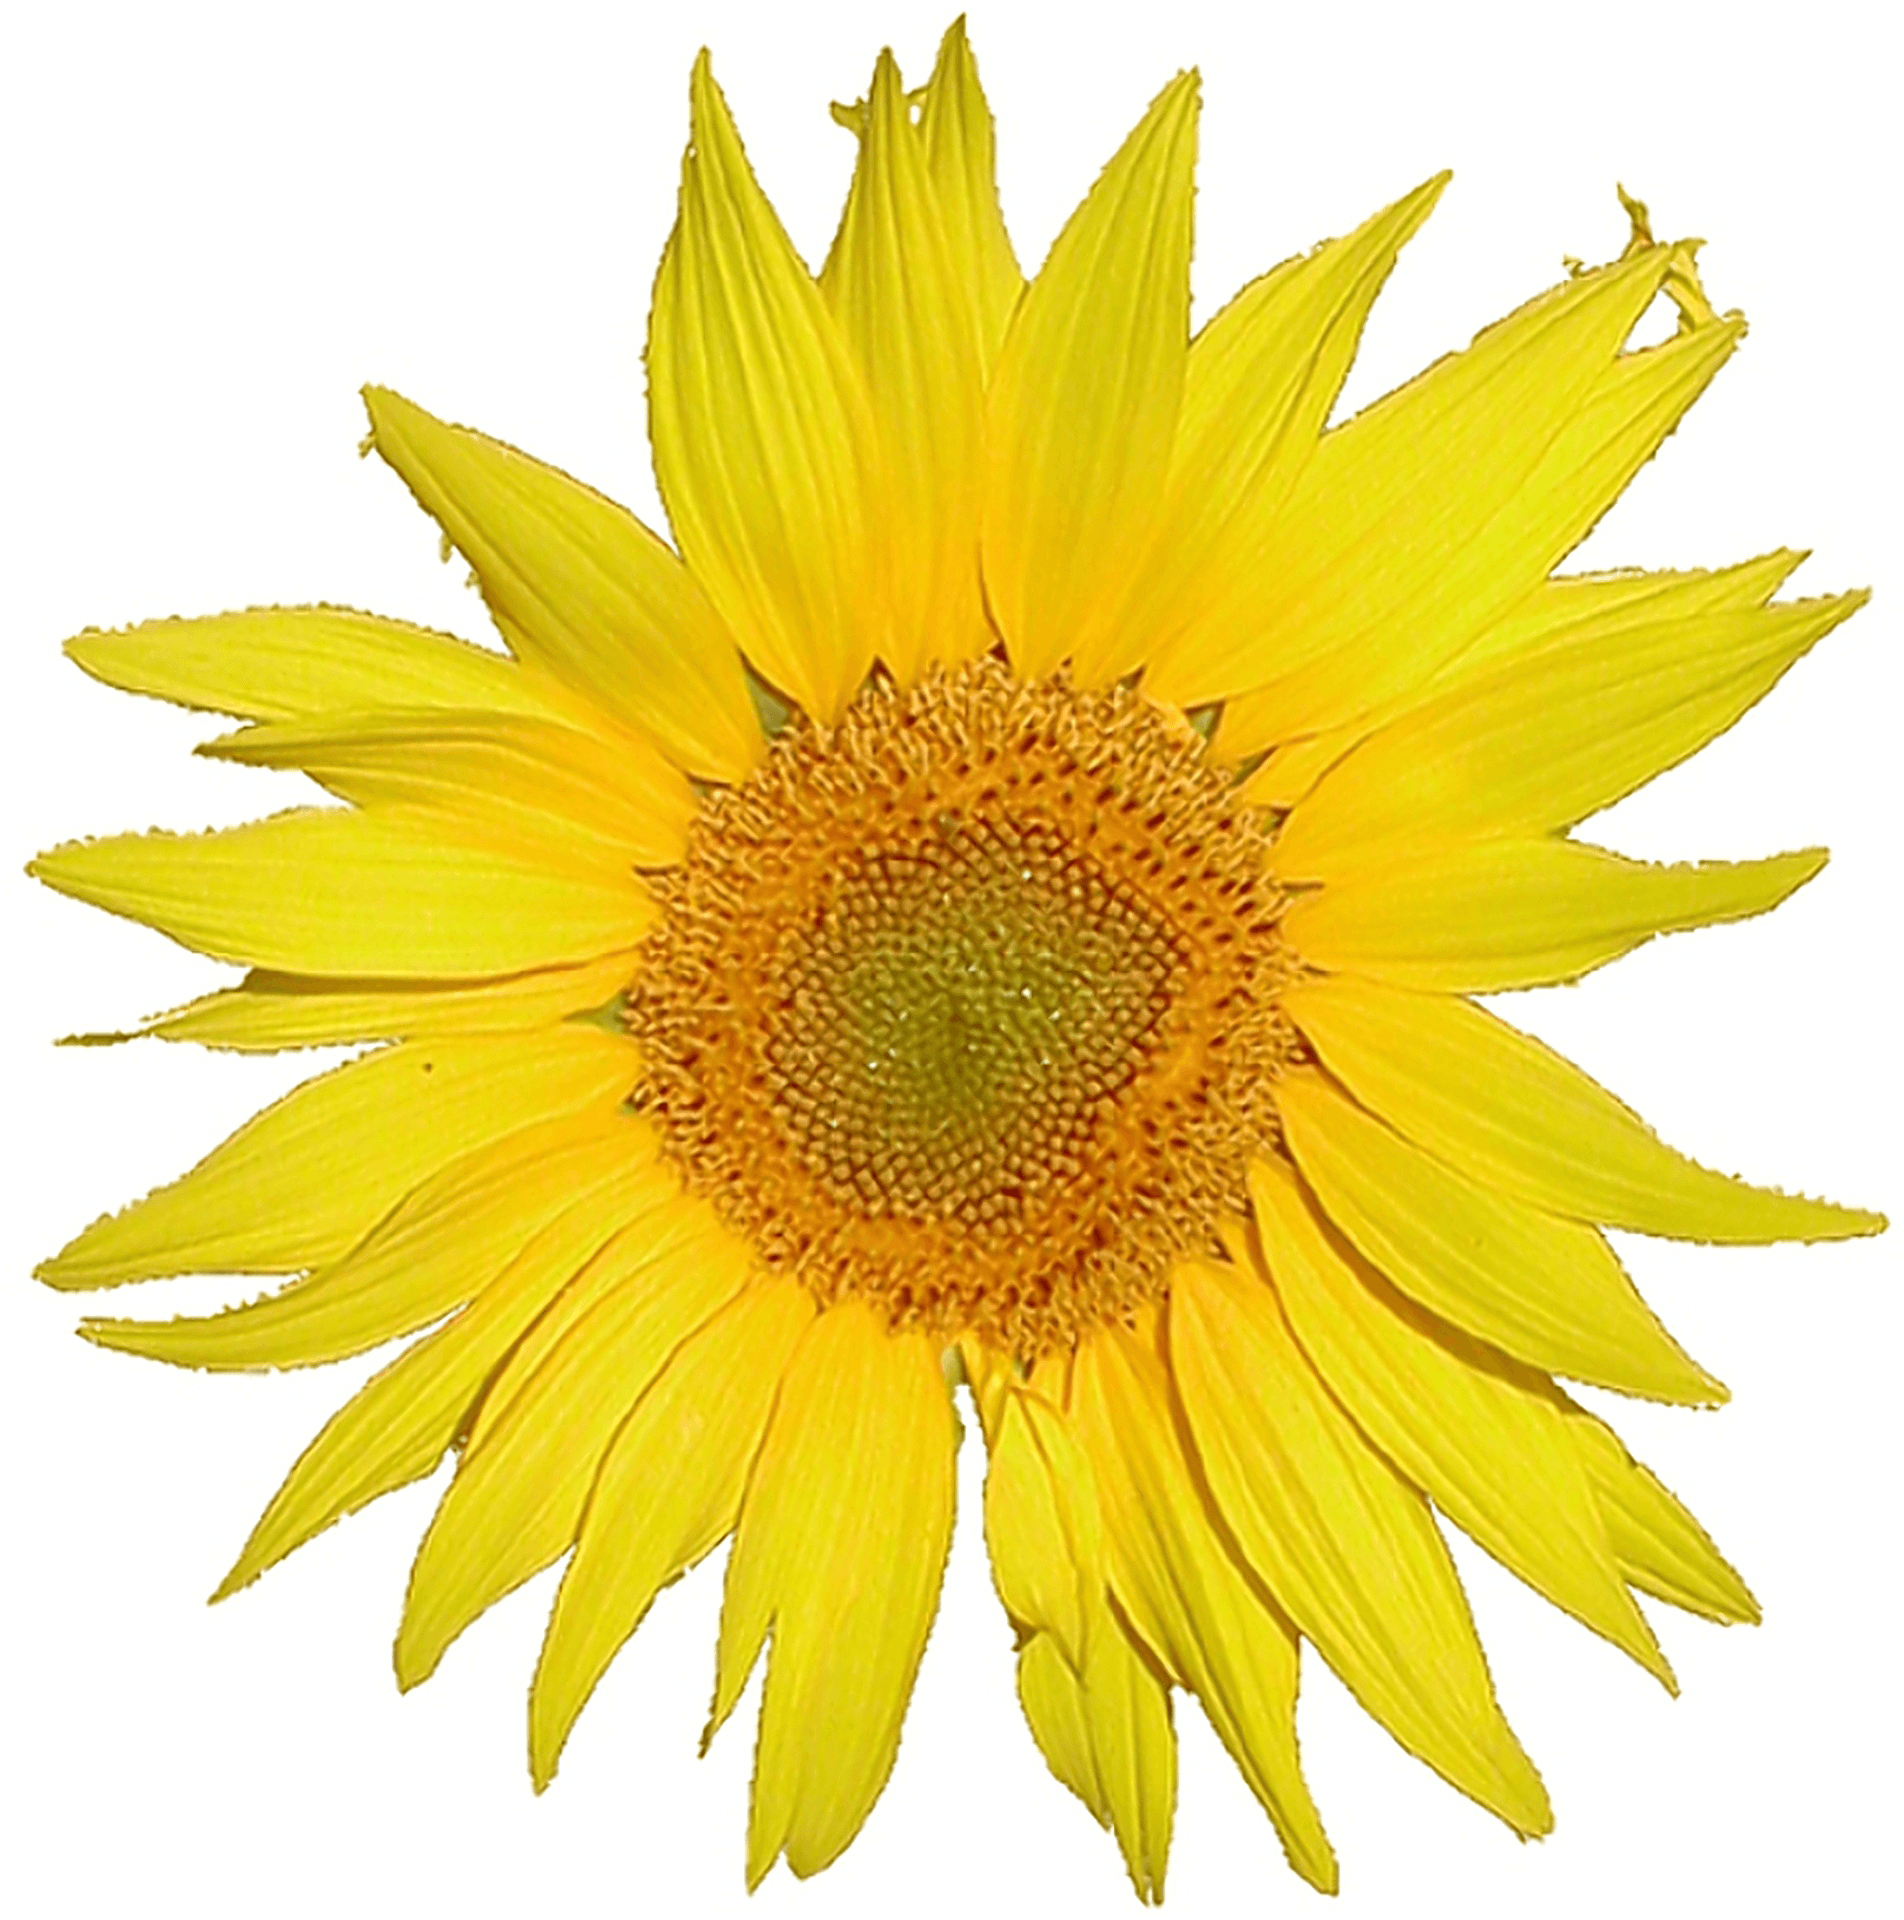 A Yellow Flower Logo - File:Mediawiki logo sunflower Tournesol 5x rev2.png - Wikimedia Commons